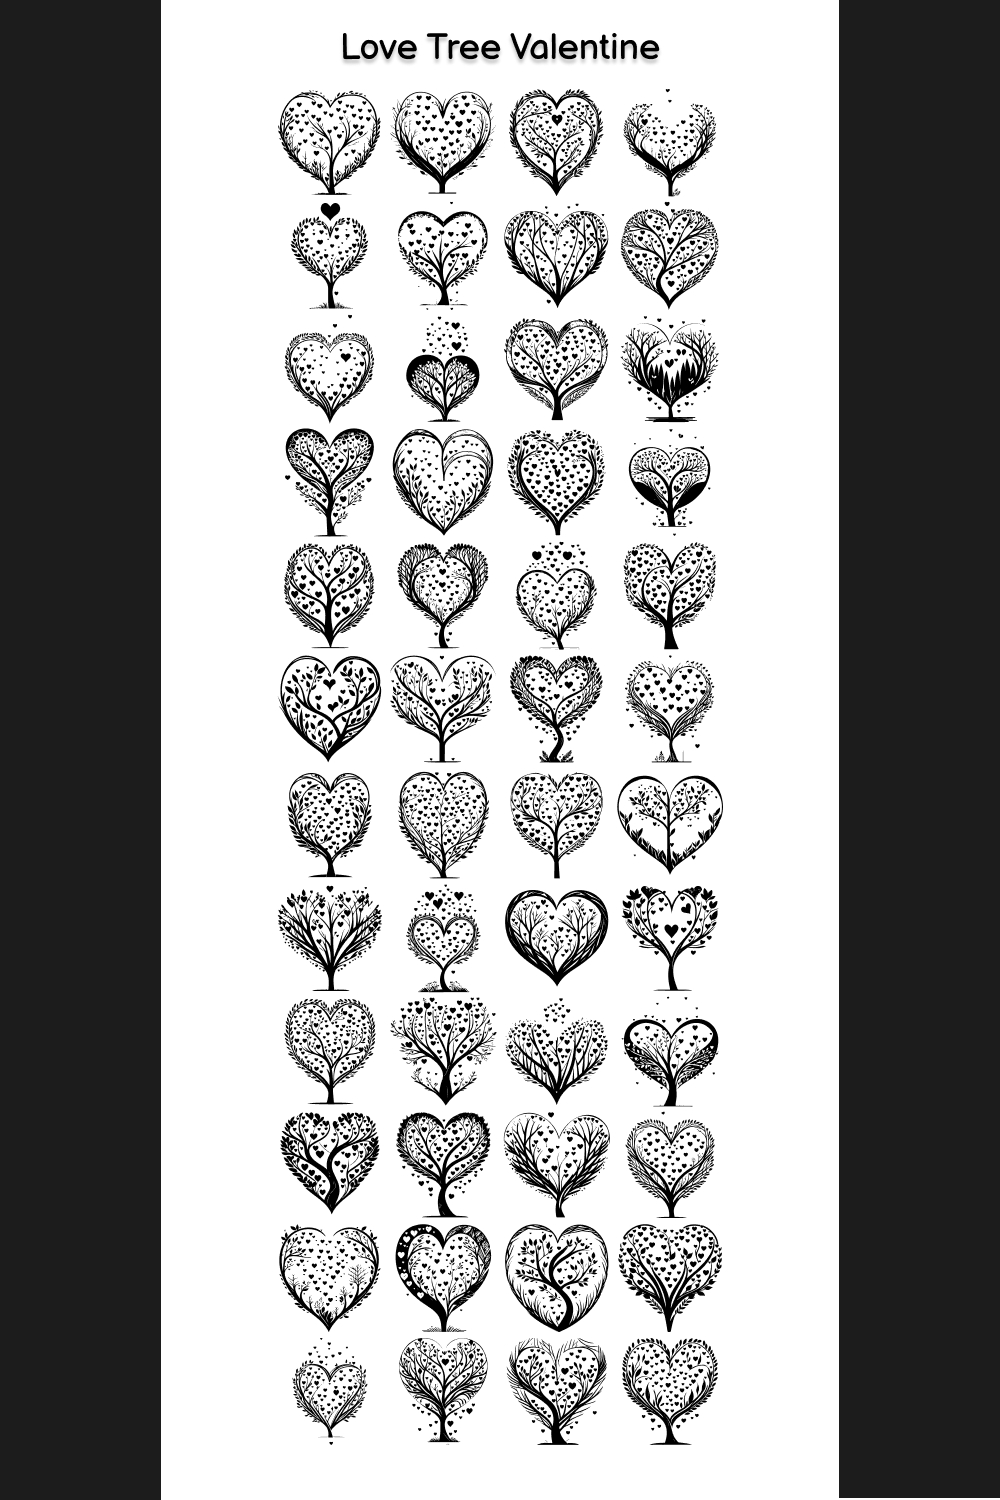 Love Tree Valentine Element Draw Black pinterest preview image.